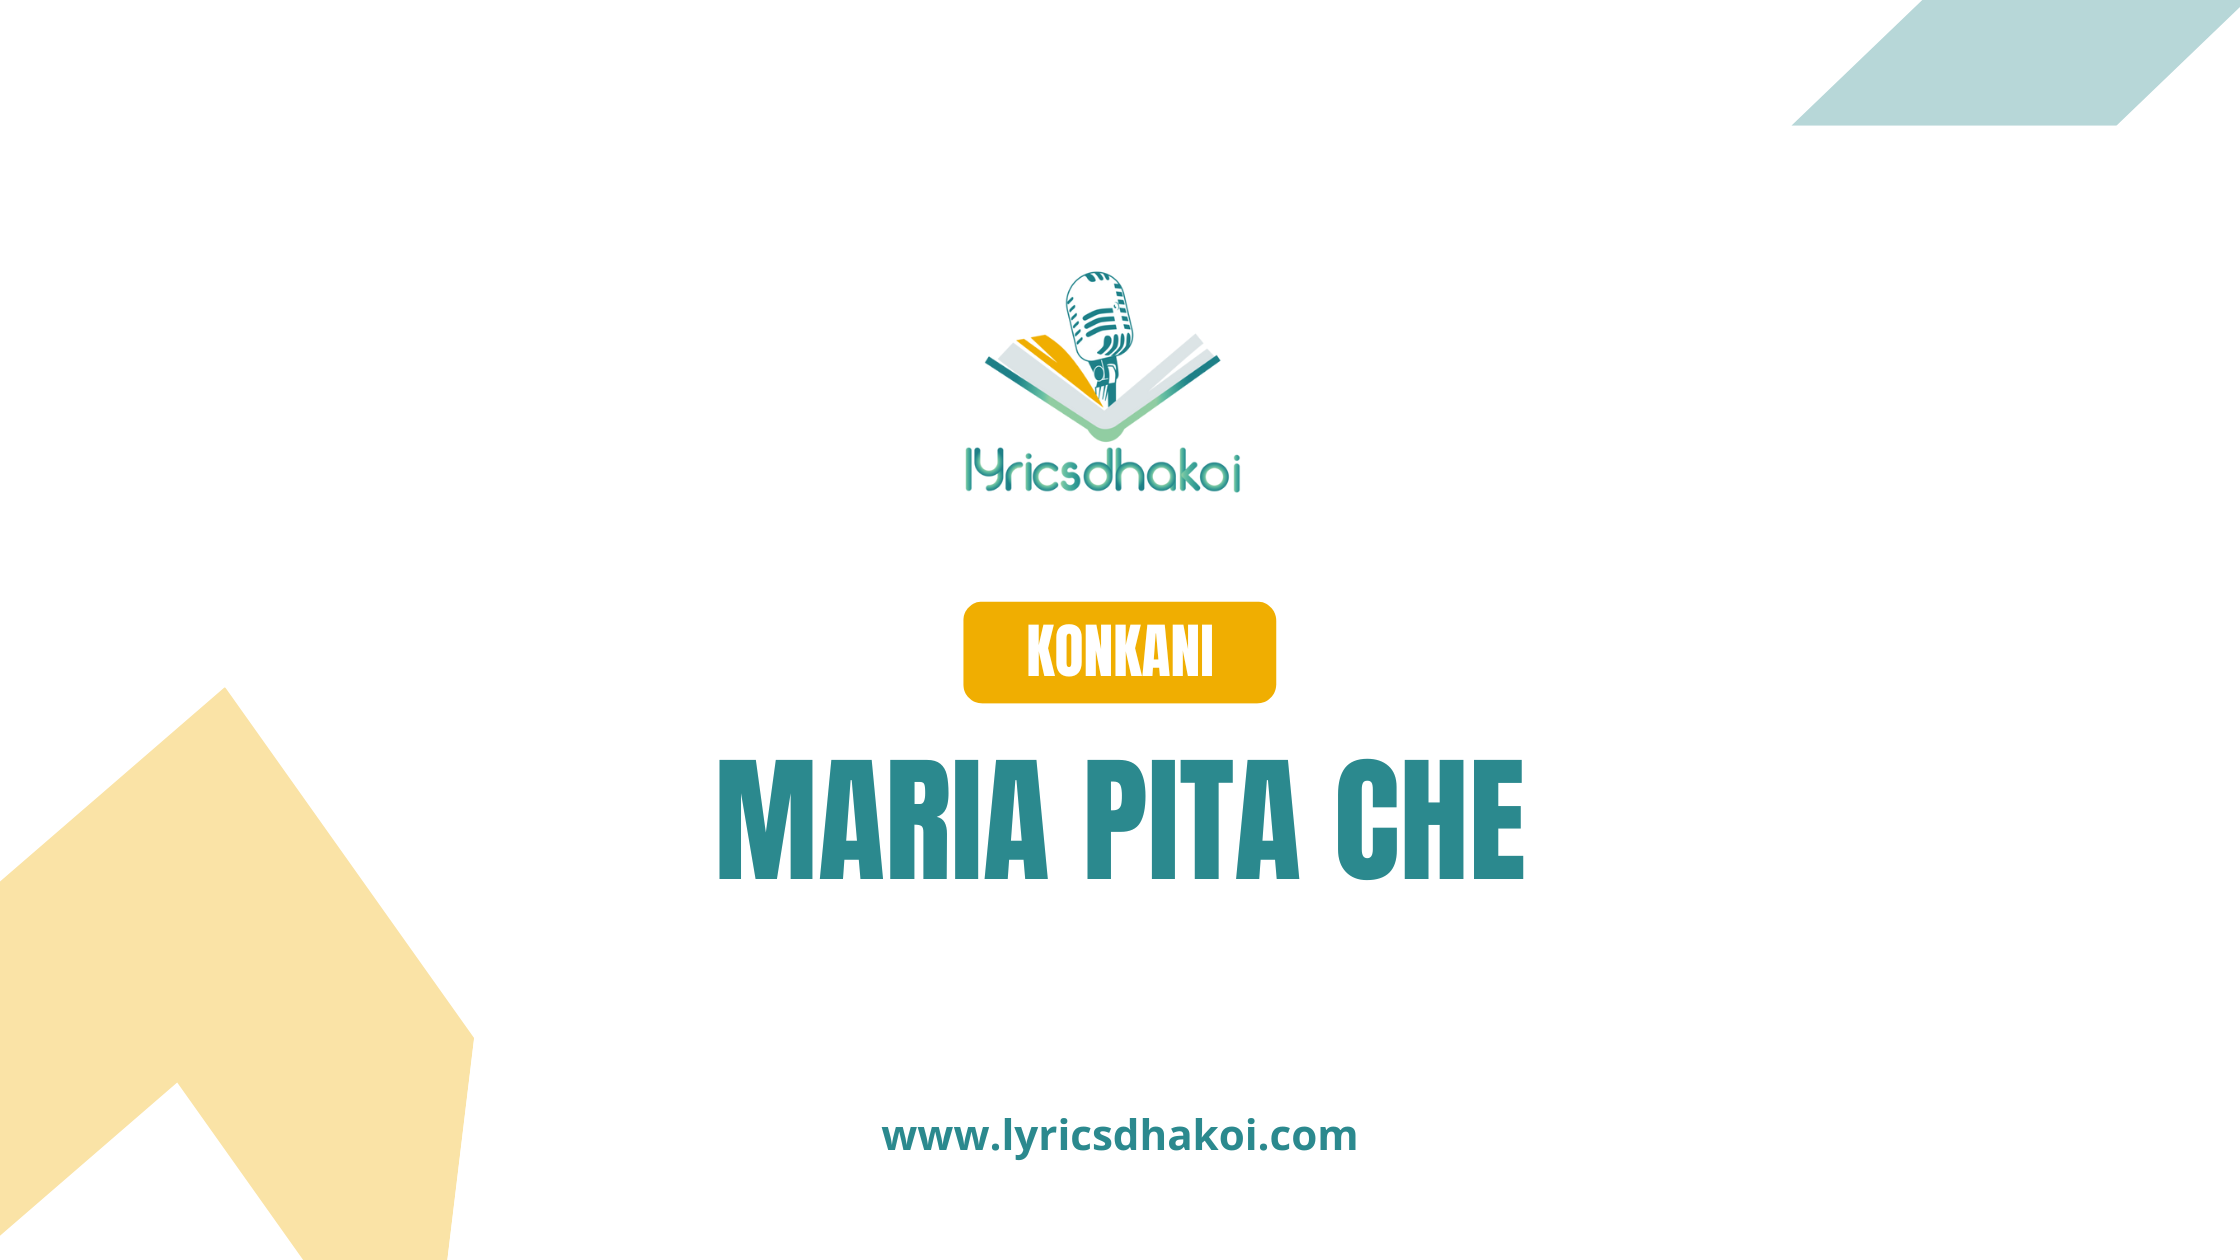 Maria Pita Che Konkani Lyrics for Karaoke Online - LyricsDhakoi.com